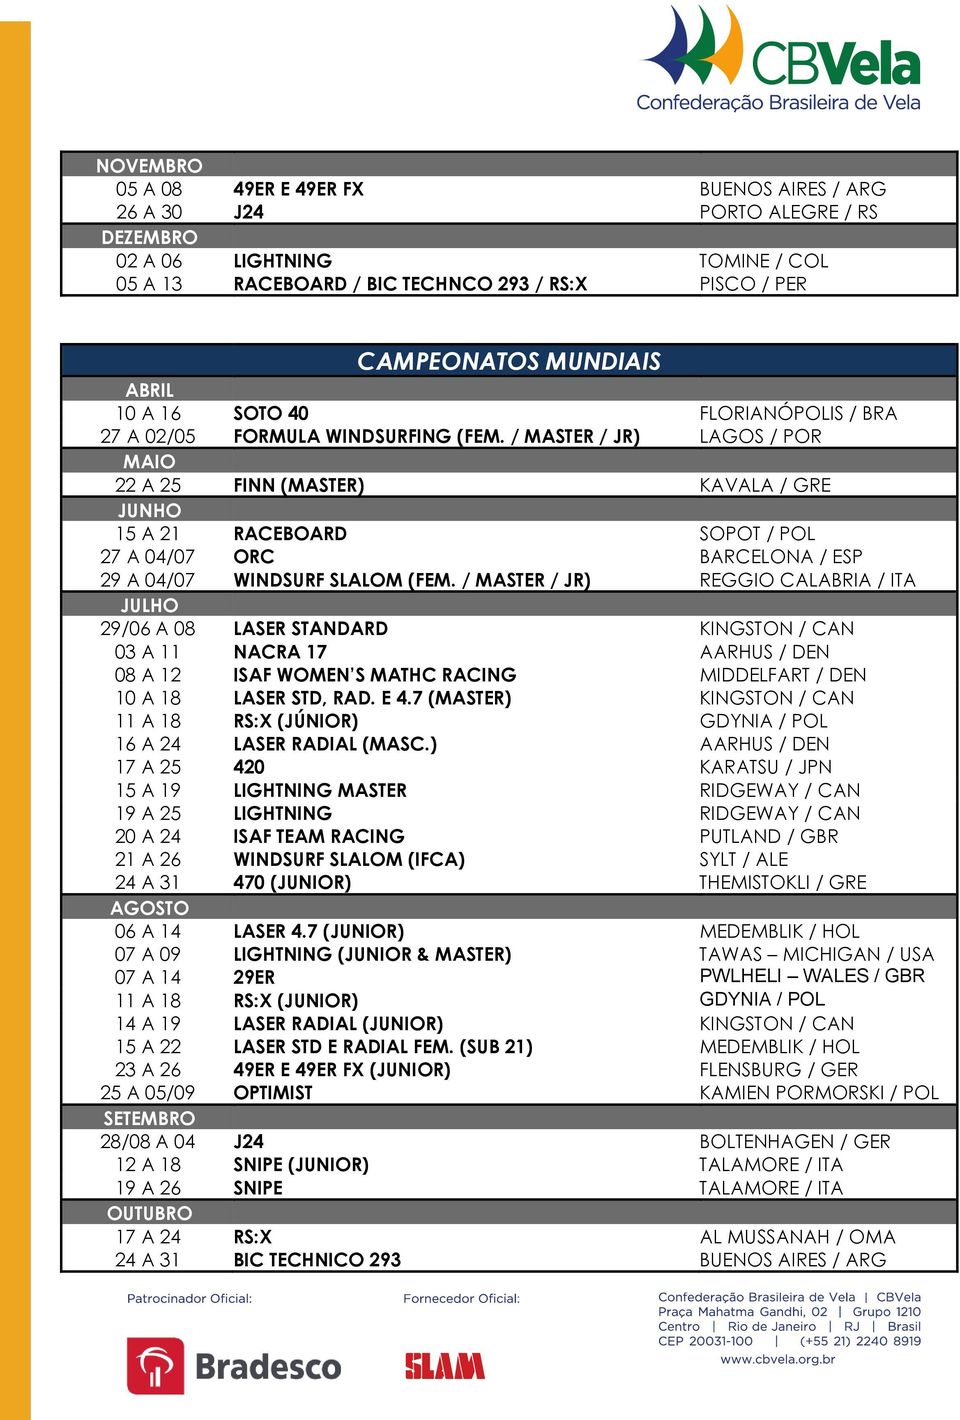 / MASTER / JR) LAGOS / POR MAIO 22 A 25 FINN (MASTER) KAVALA / GRE 15 A 21 RACEBOARD SOPOT / POL 27 A 04/07 ORC BARCELONA / ESP 29 A 04/07 WINDSURF SLALOM (FEM.